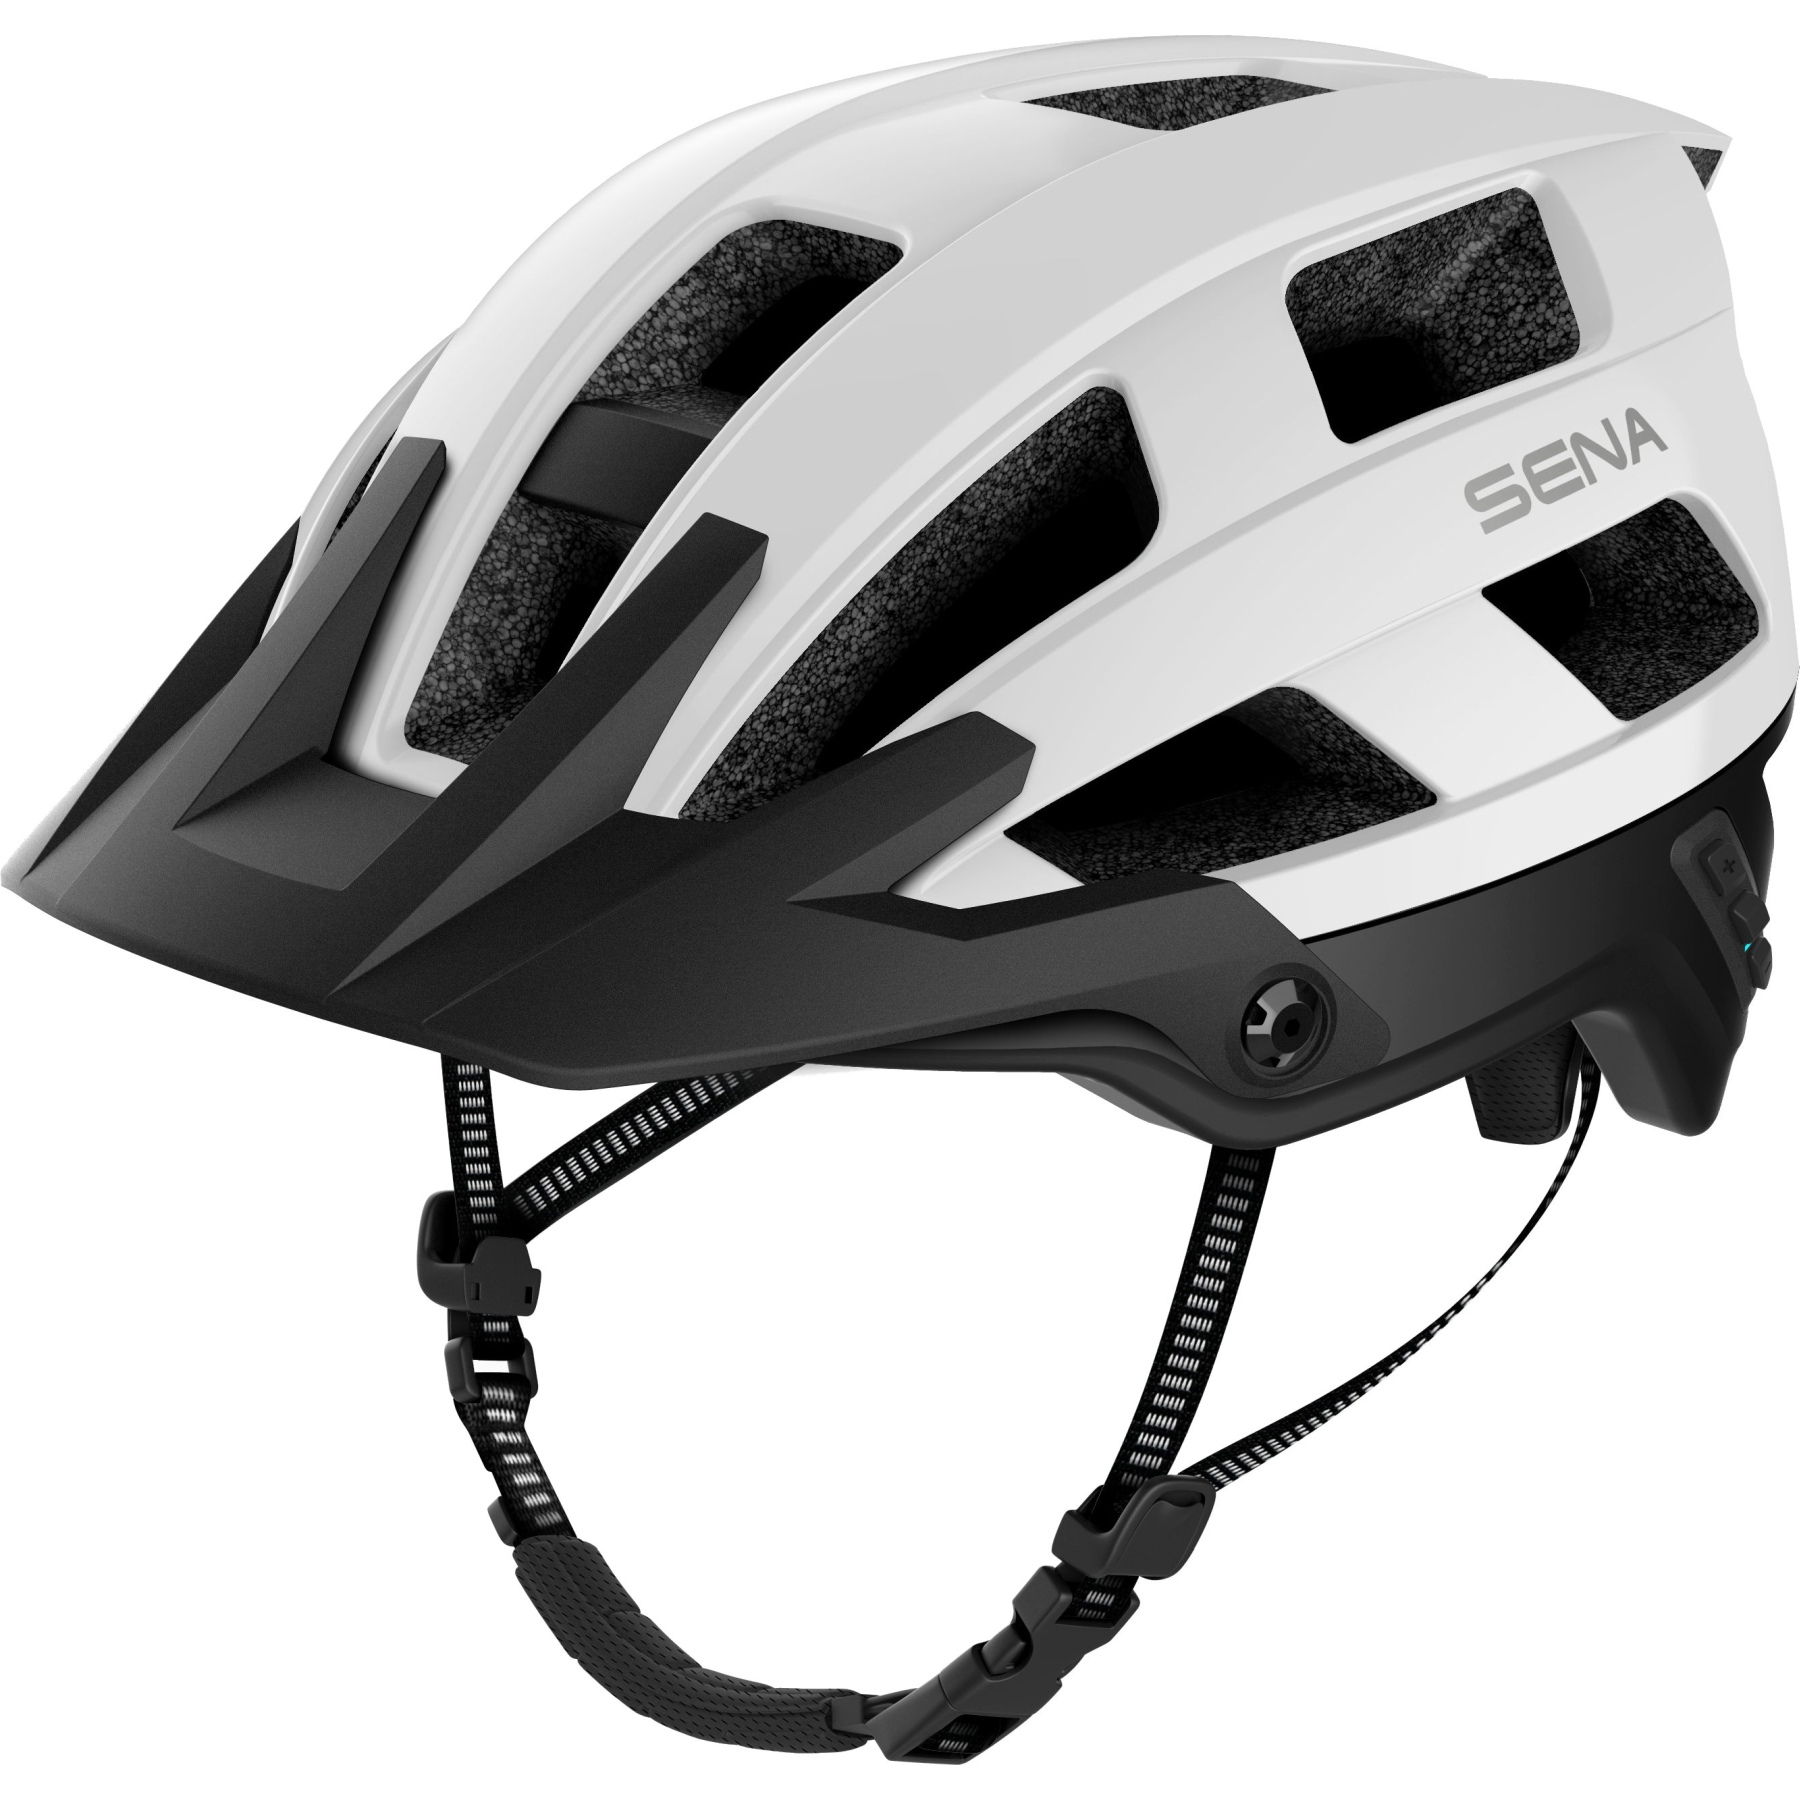 Productfoto van SENA M1 EVO Smart MTB Helmet - without FM Radio - Matte White